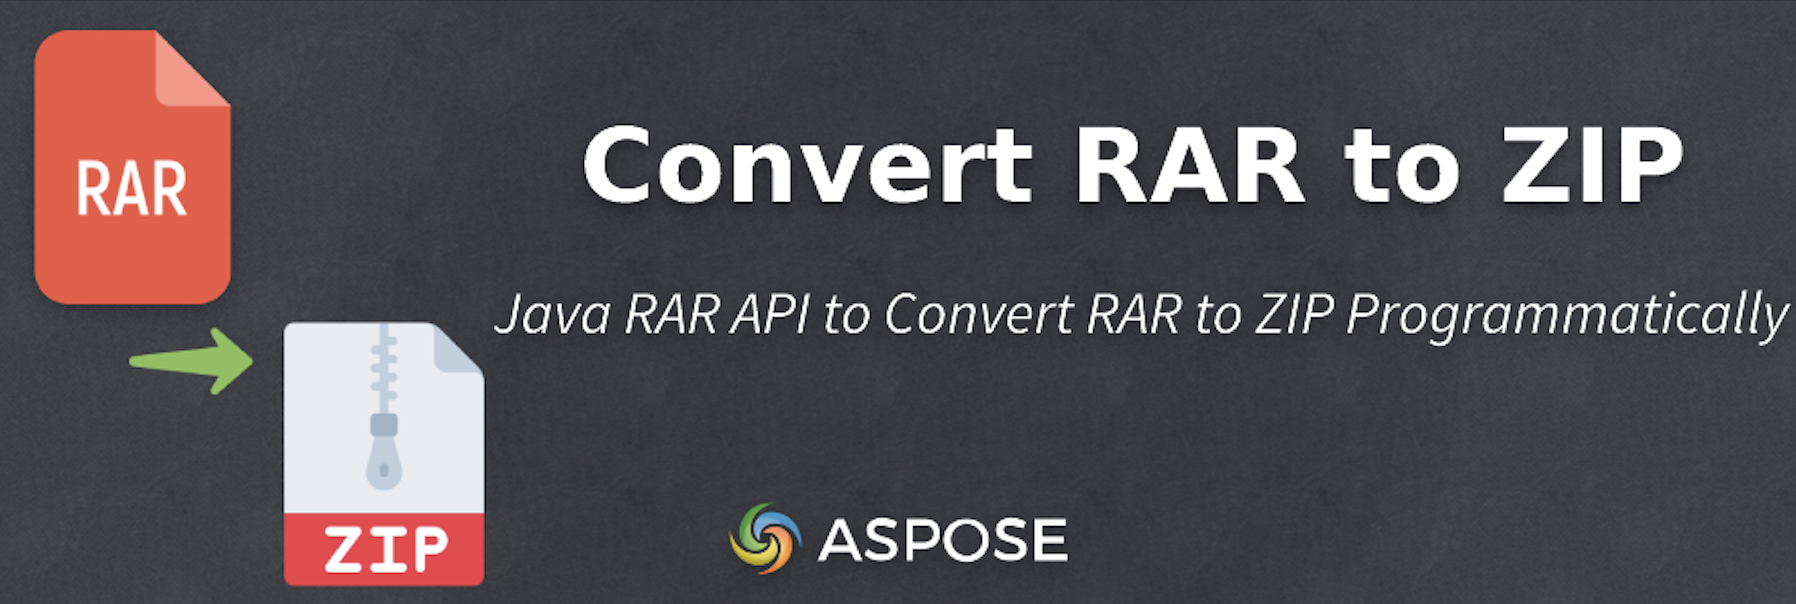 Java에서 RAR을 ZIP으로 변환 - Java RAR API